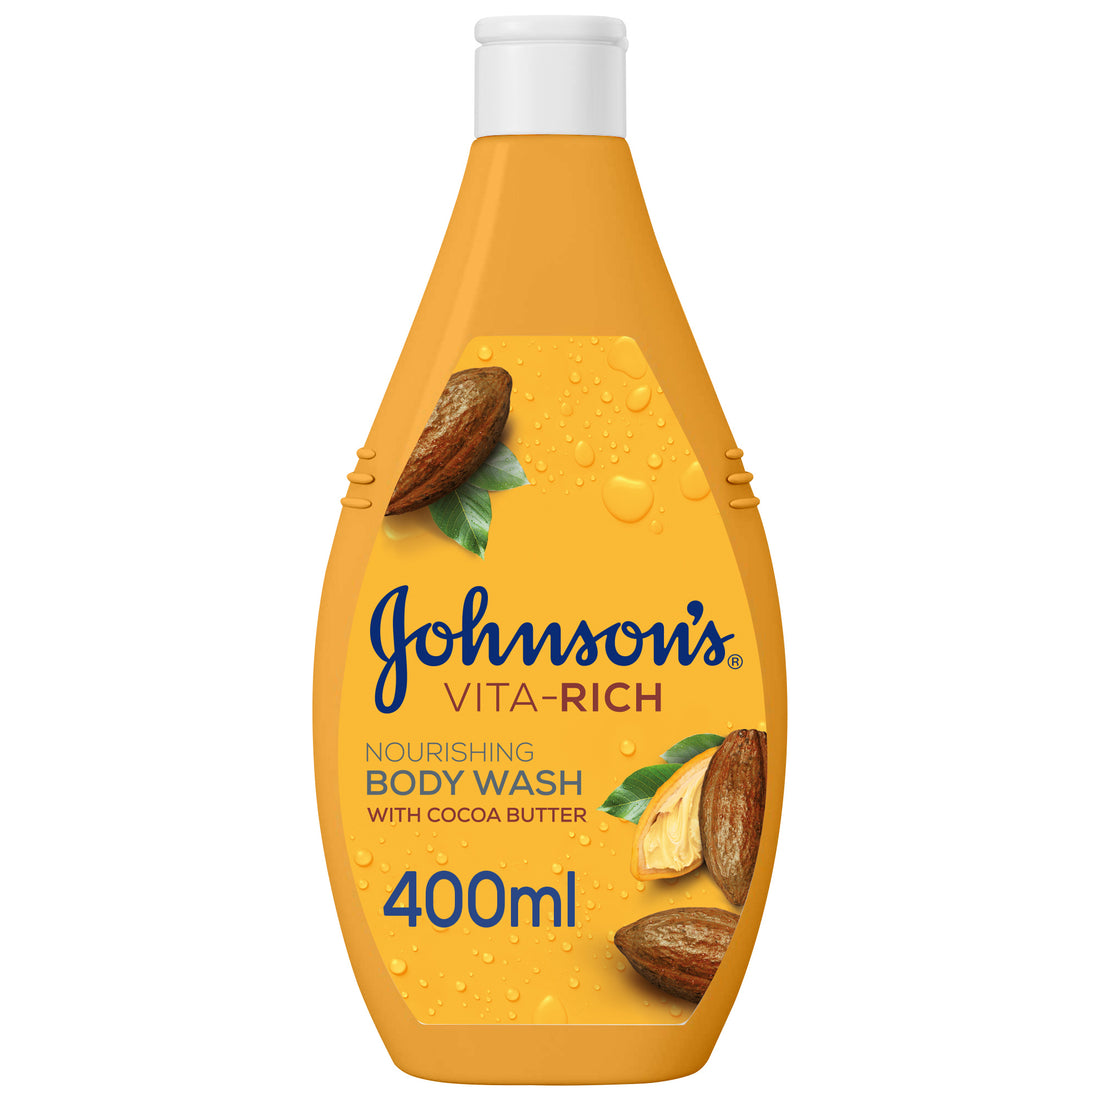 JOHNSON’S Body Wash - Vita-Rich, Nourishing Cocoa Butter, 400ml